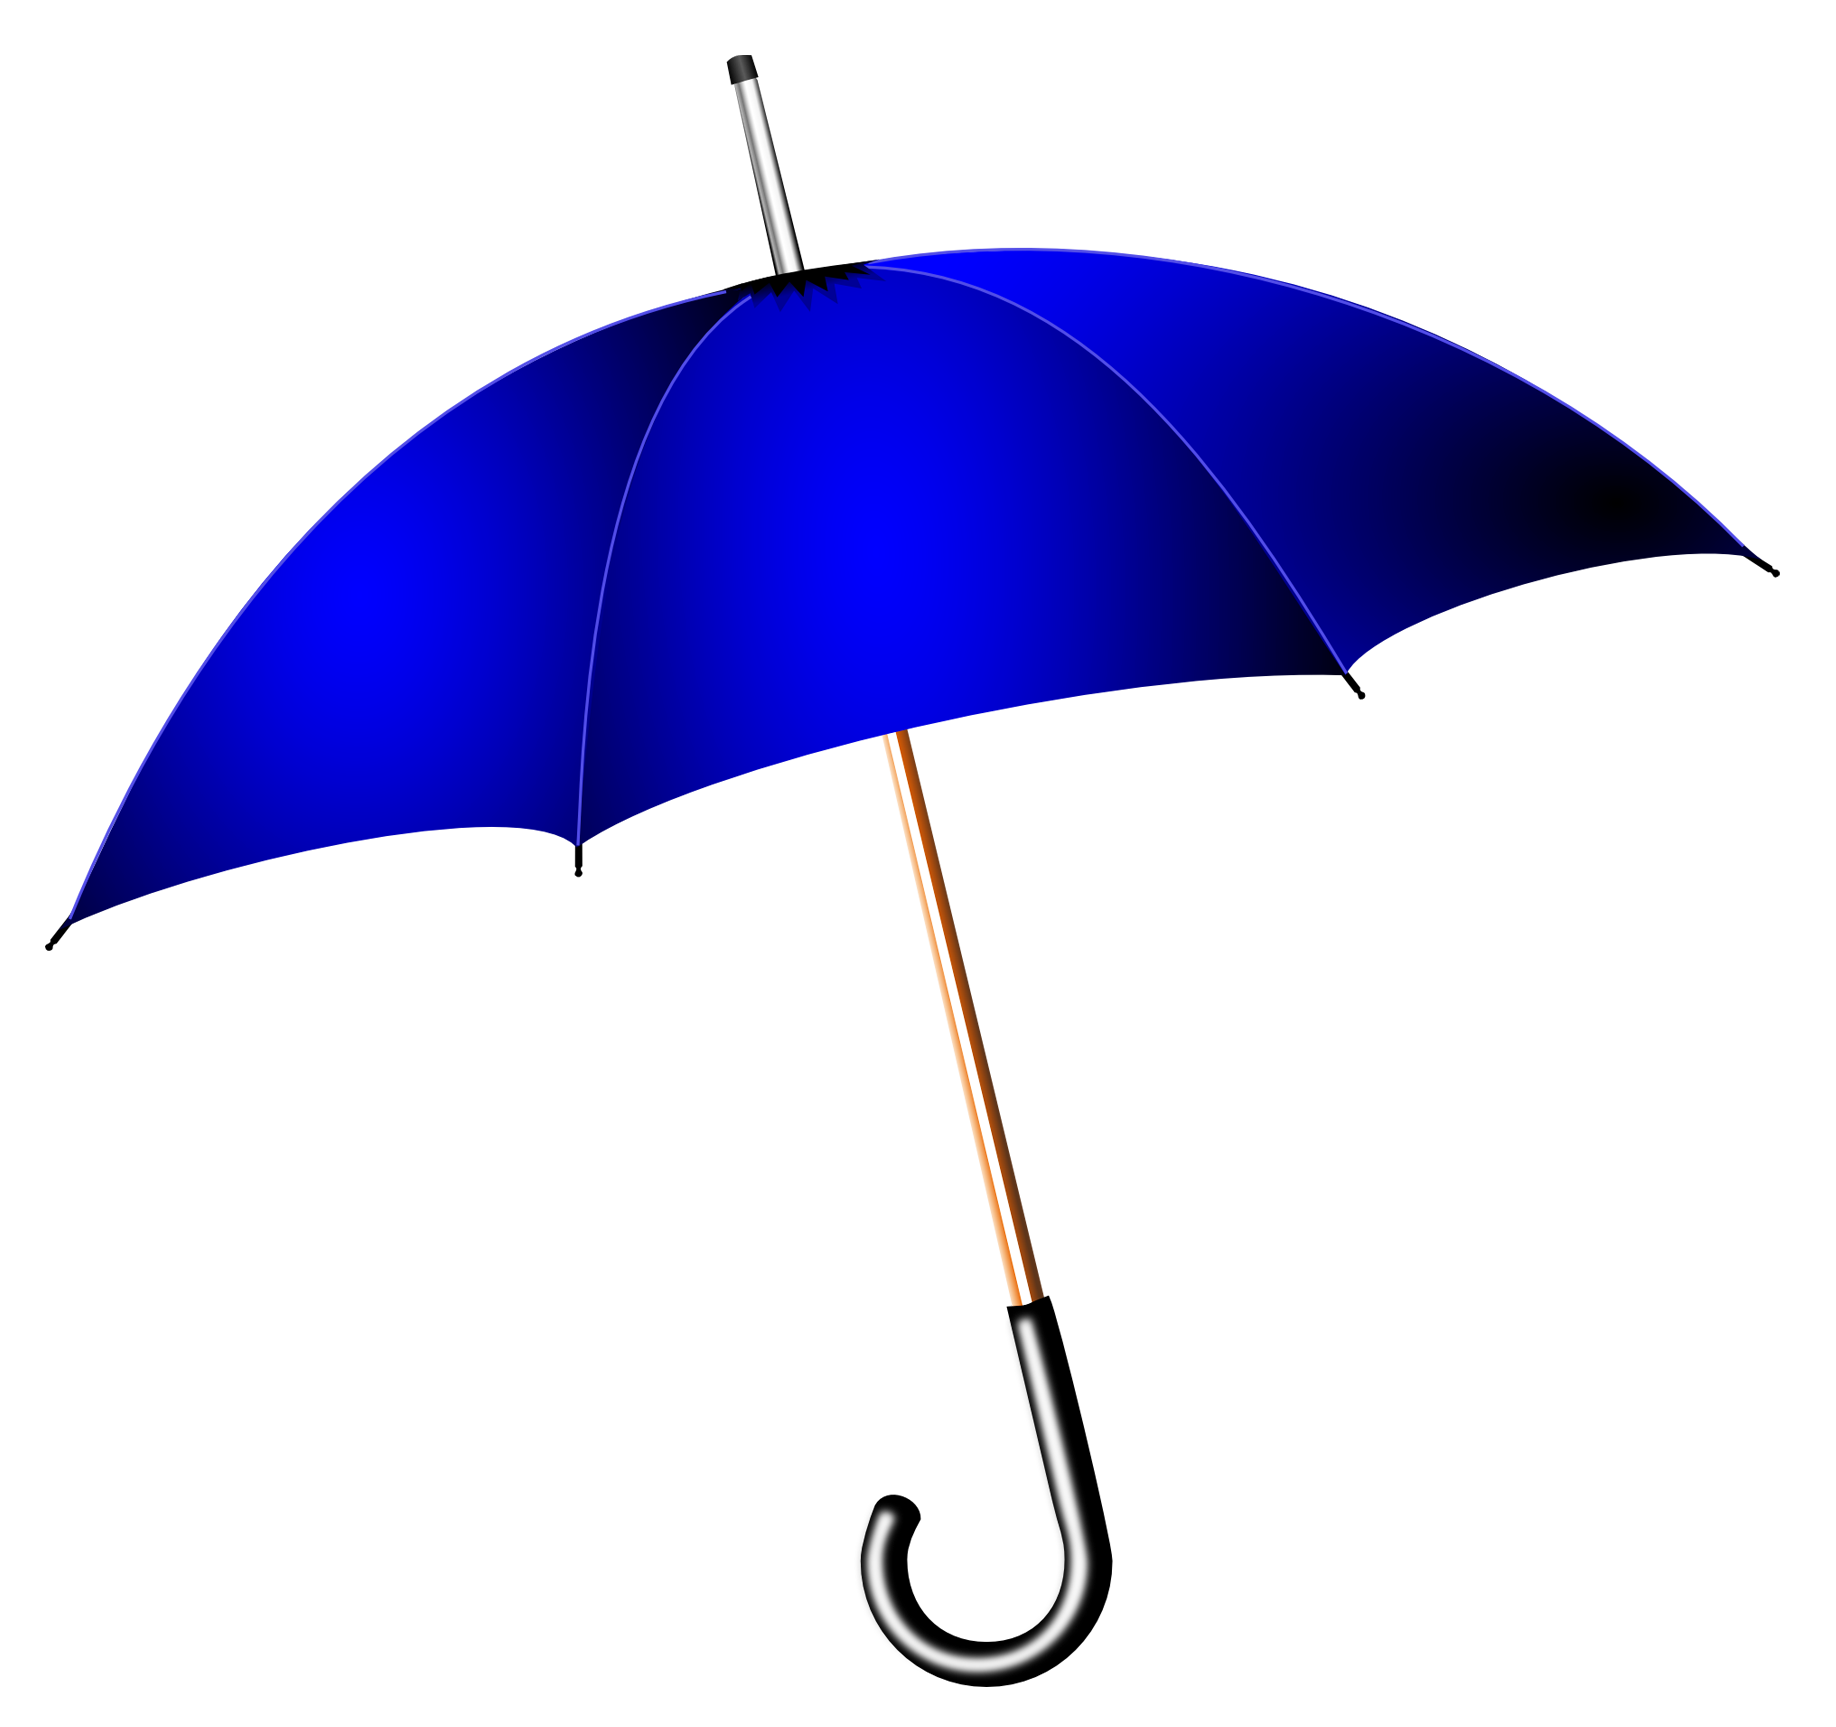 A Blue Umbrella With A Black Background